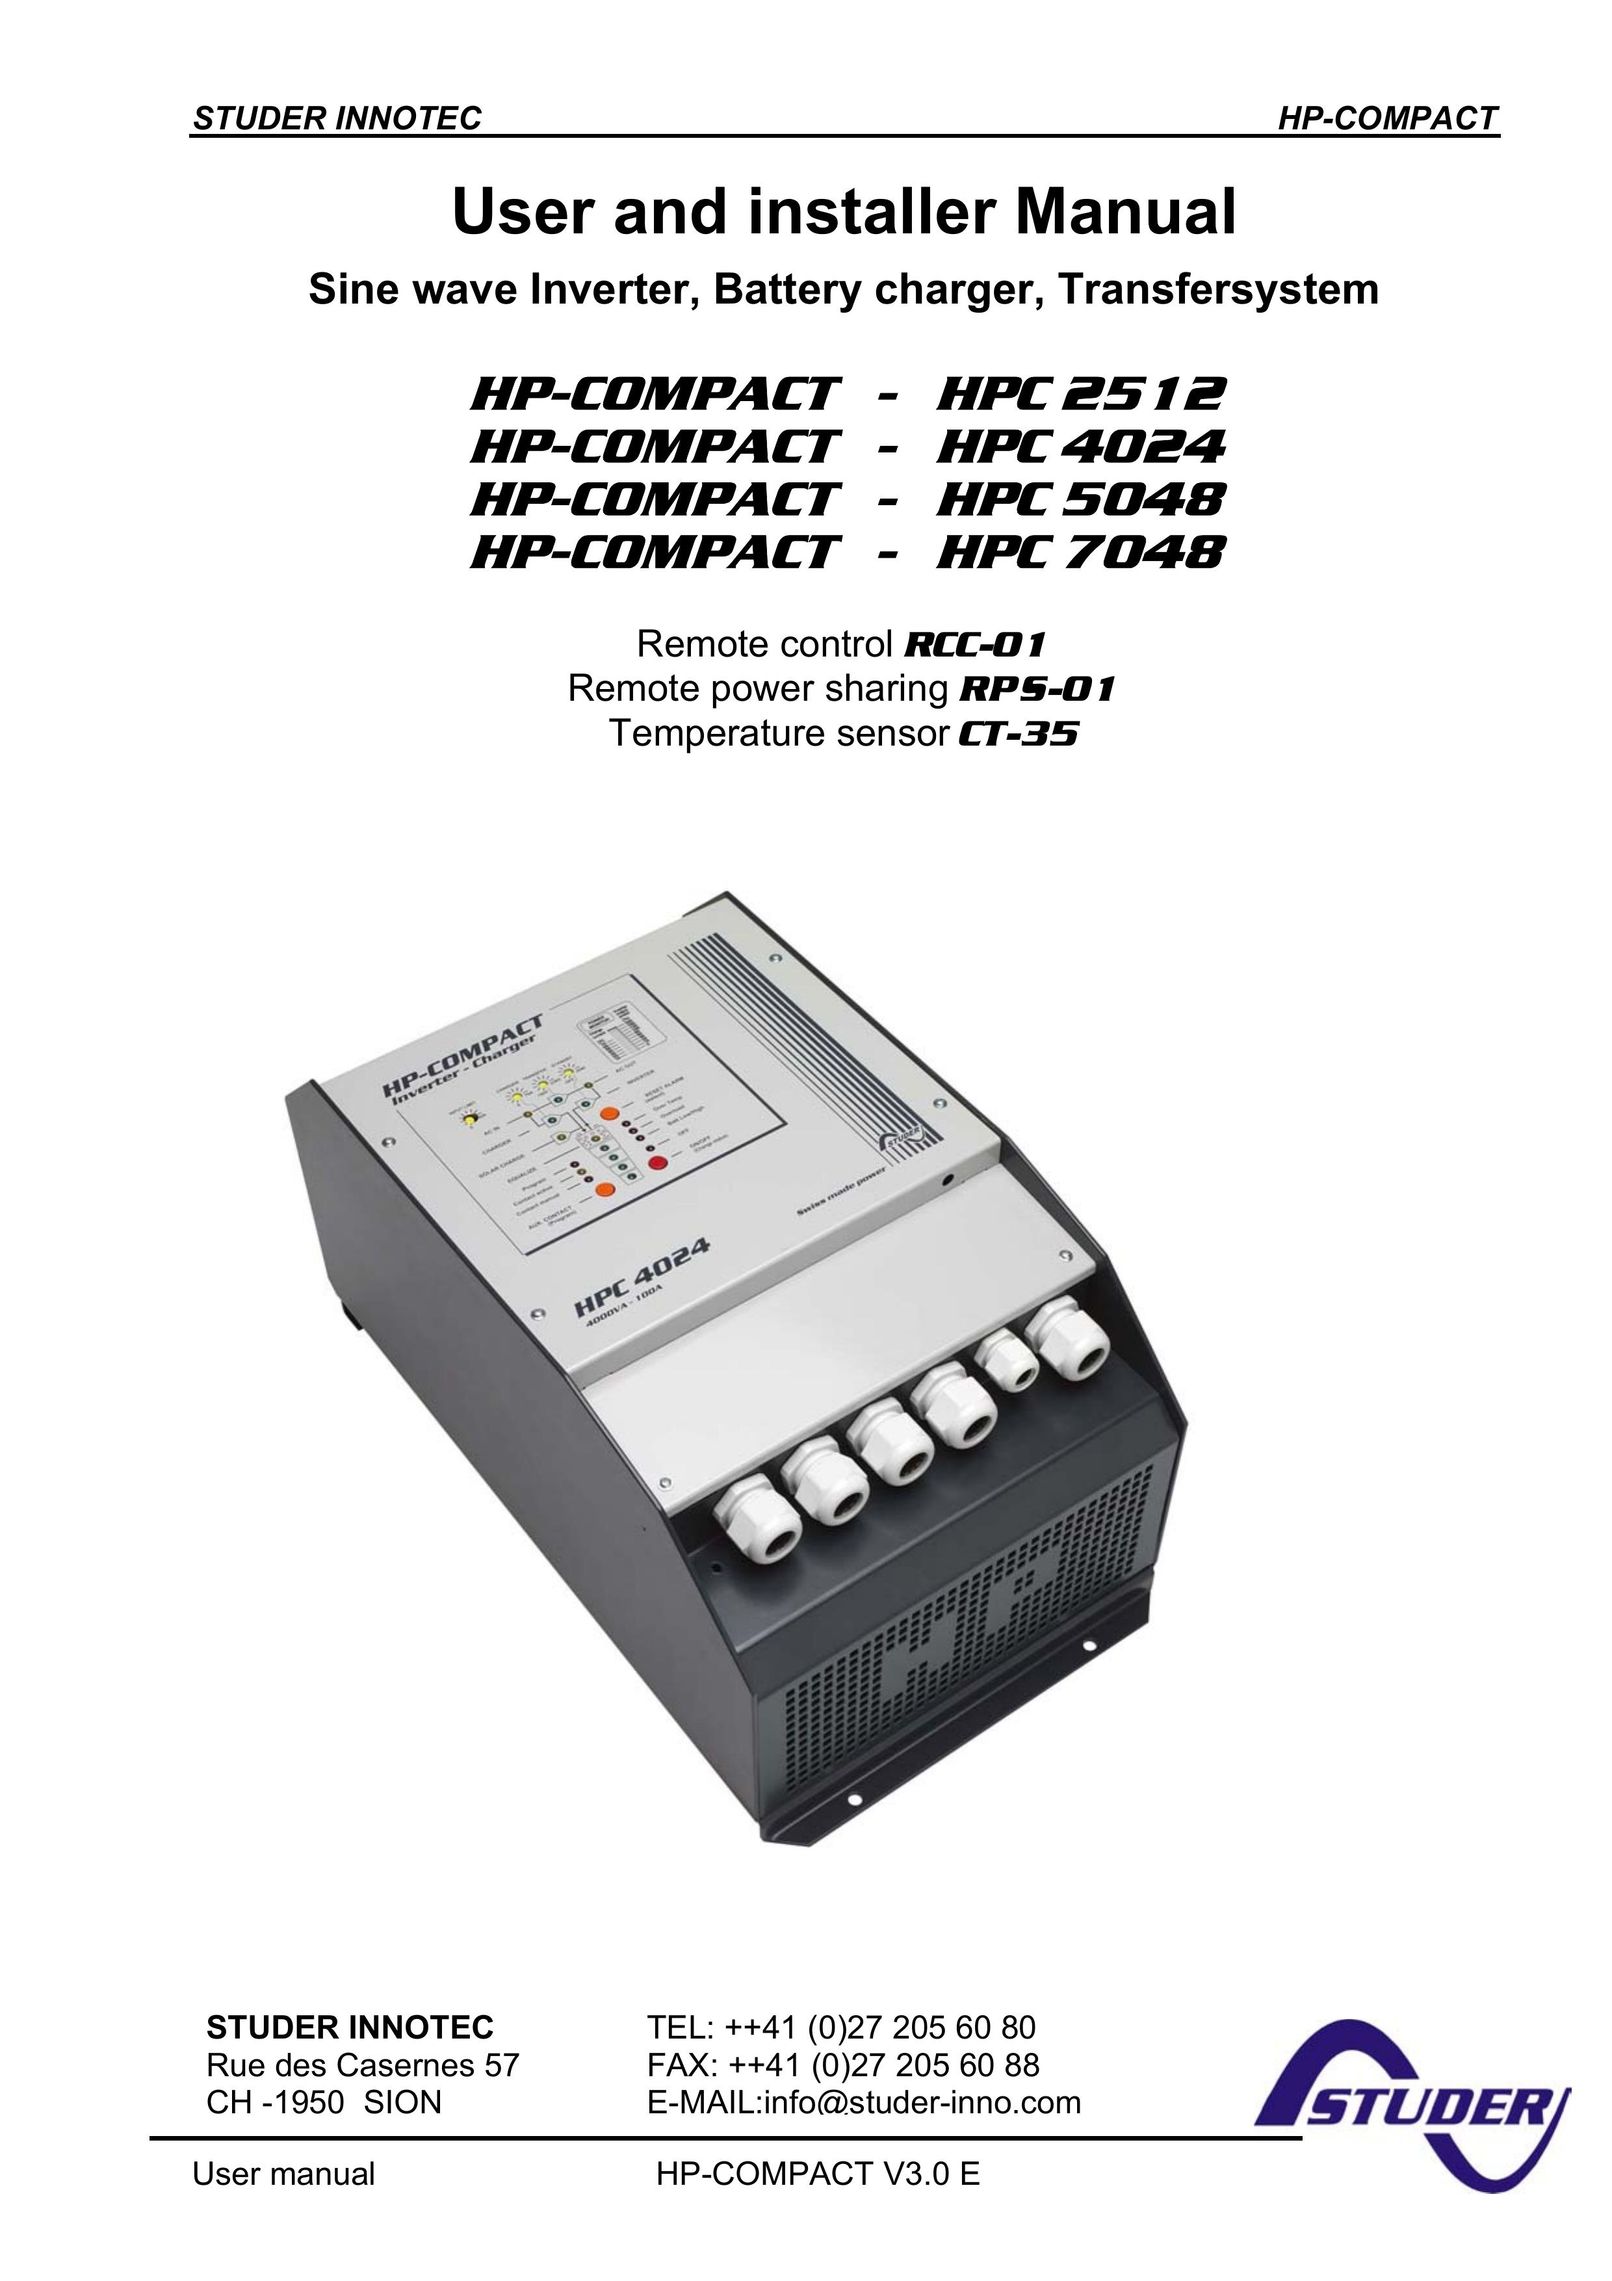 Studer Innotec HPC2512 Battery Charger User Manual